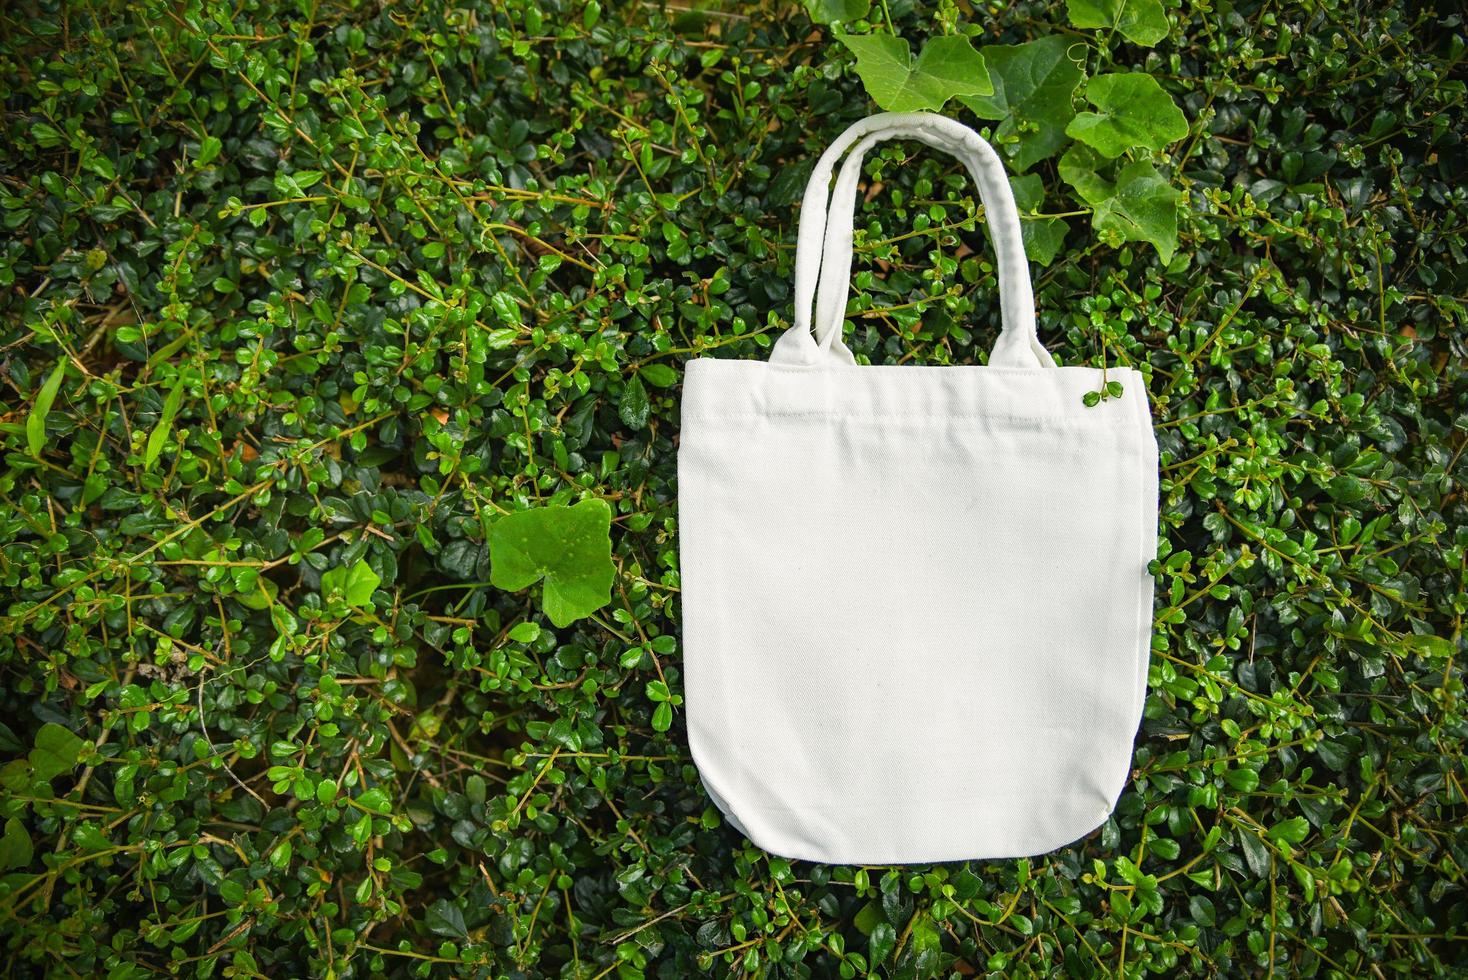 vit tote canvas tyg eco bag tyg shoppingsäck på gröna blad natur bakgrund foto